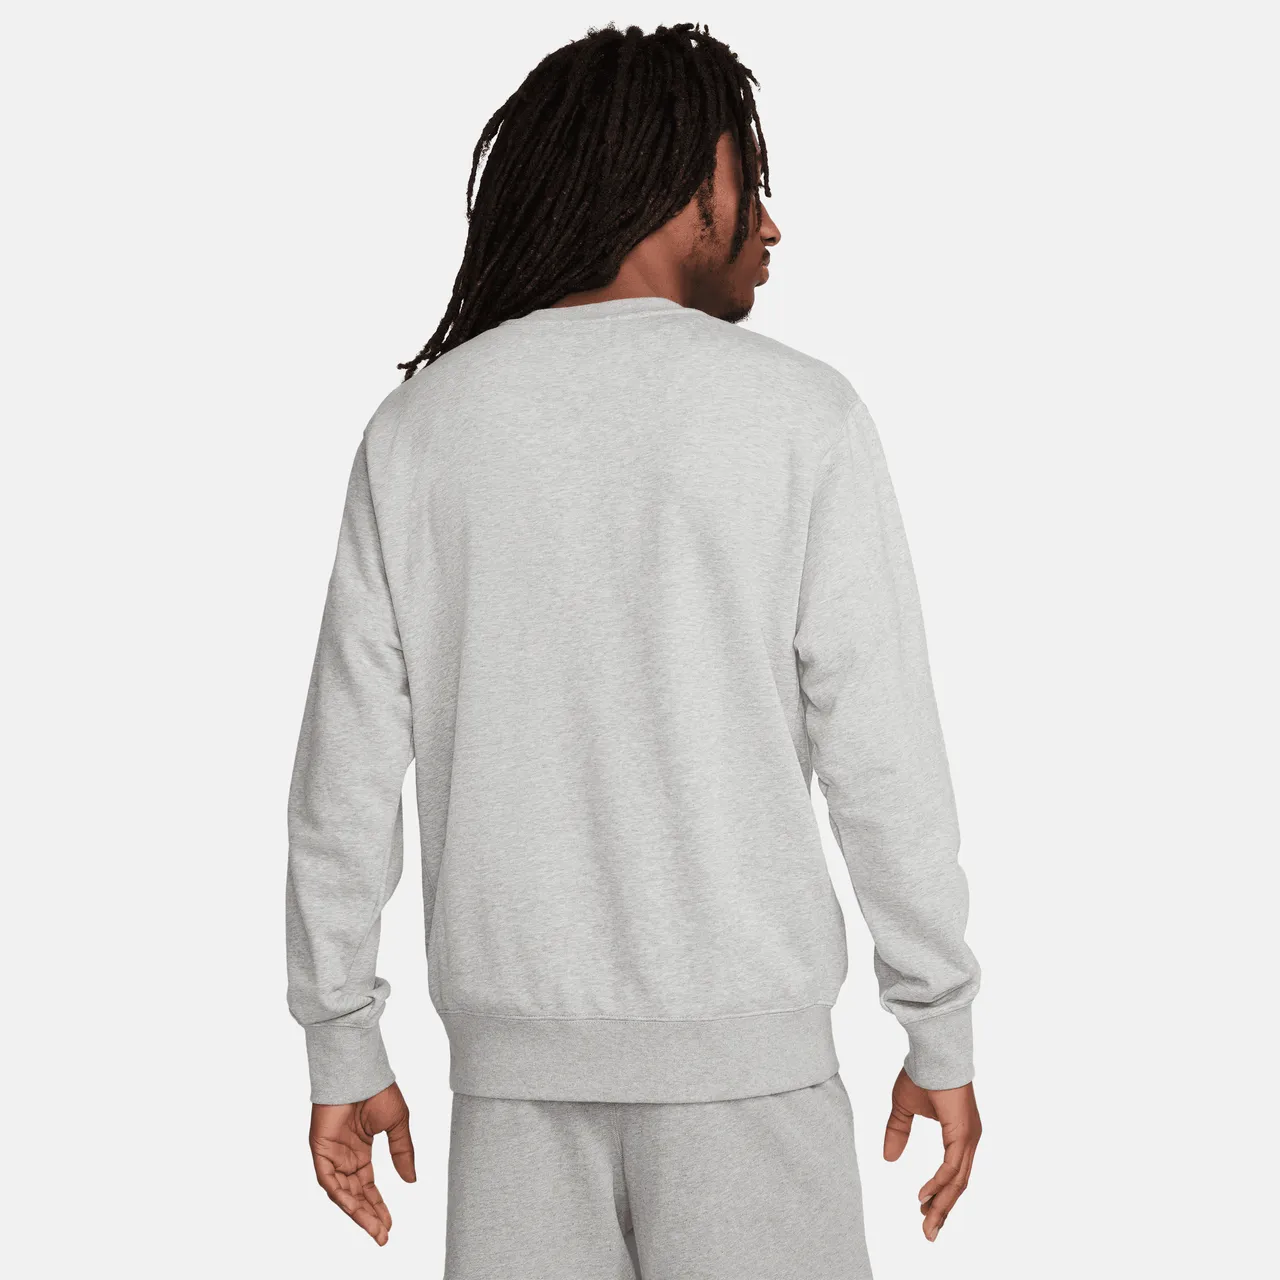 Nike Sportswear Men's French Terry Crew-Neck Sweatshirt - Grey - Polyester